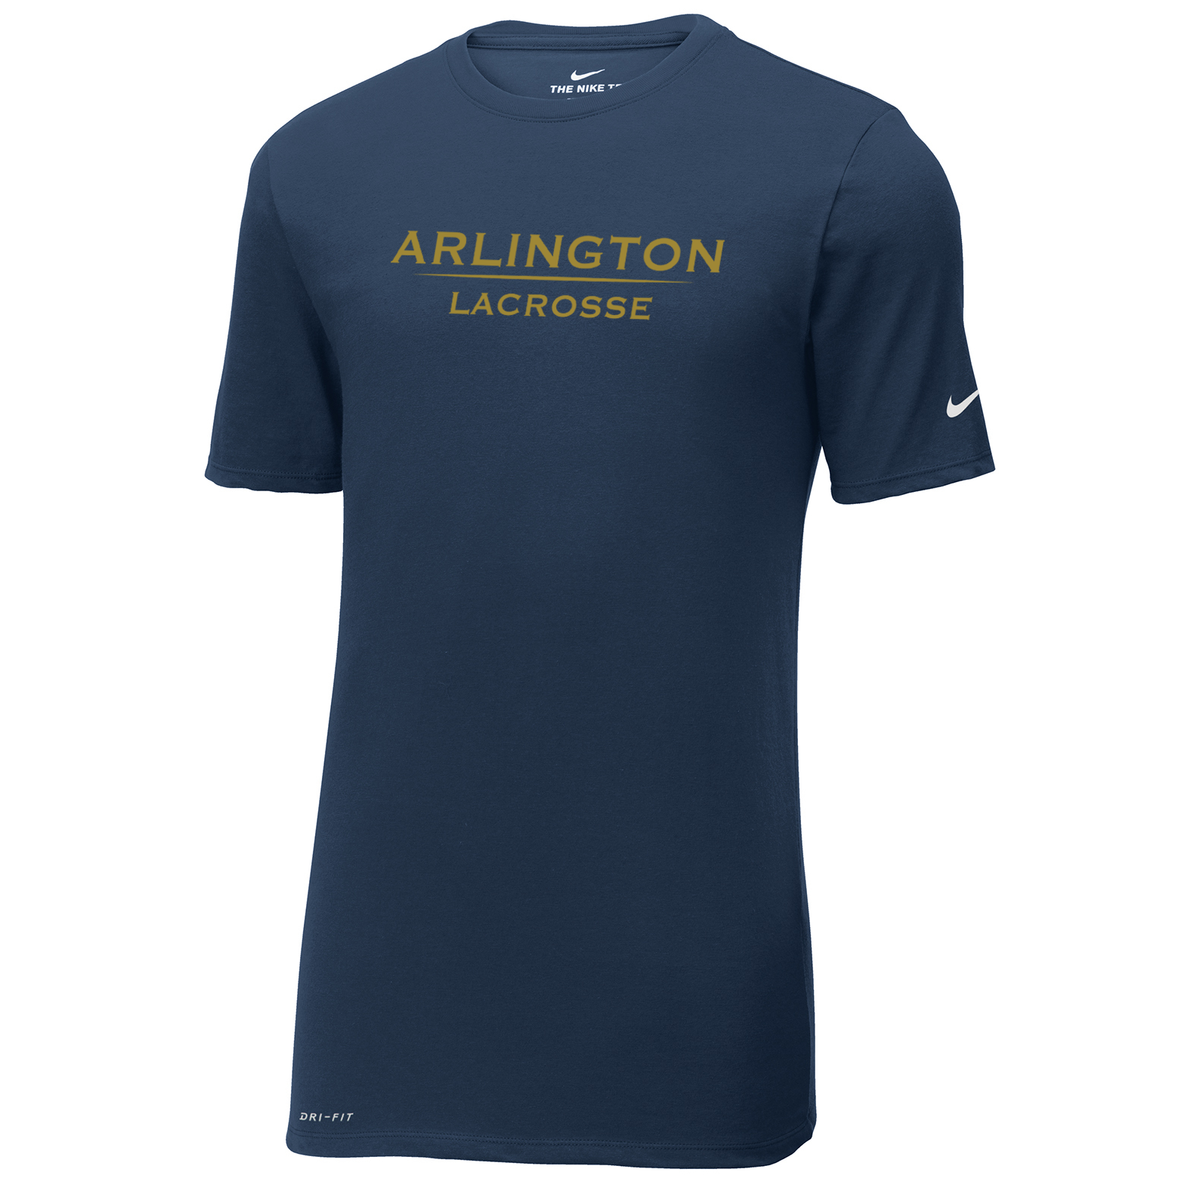 Arlington Lacrosse Nike Dri-FIT Tee